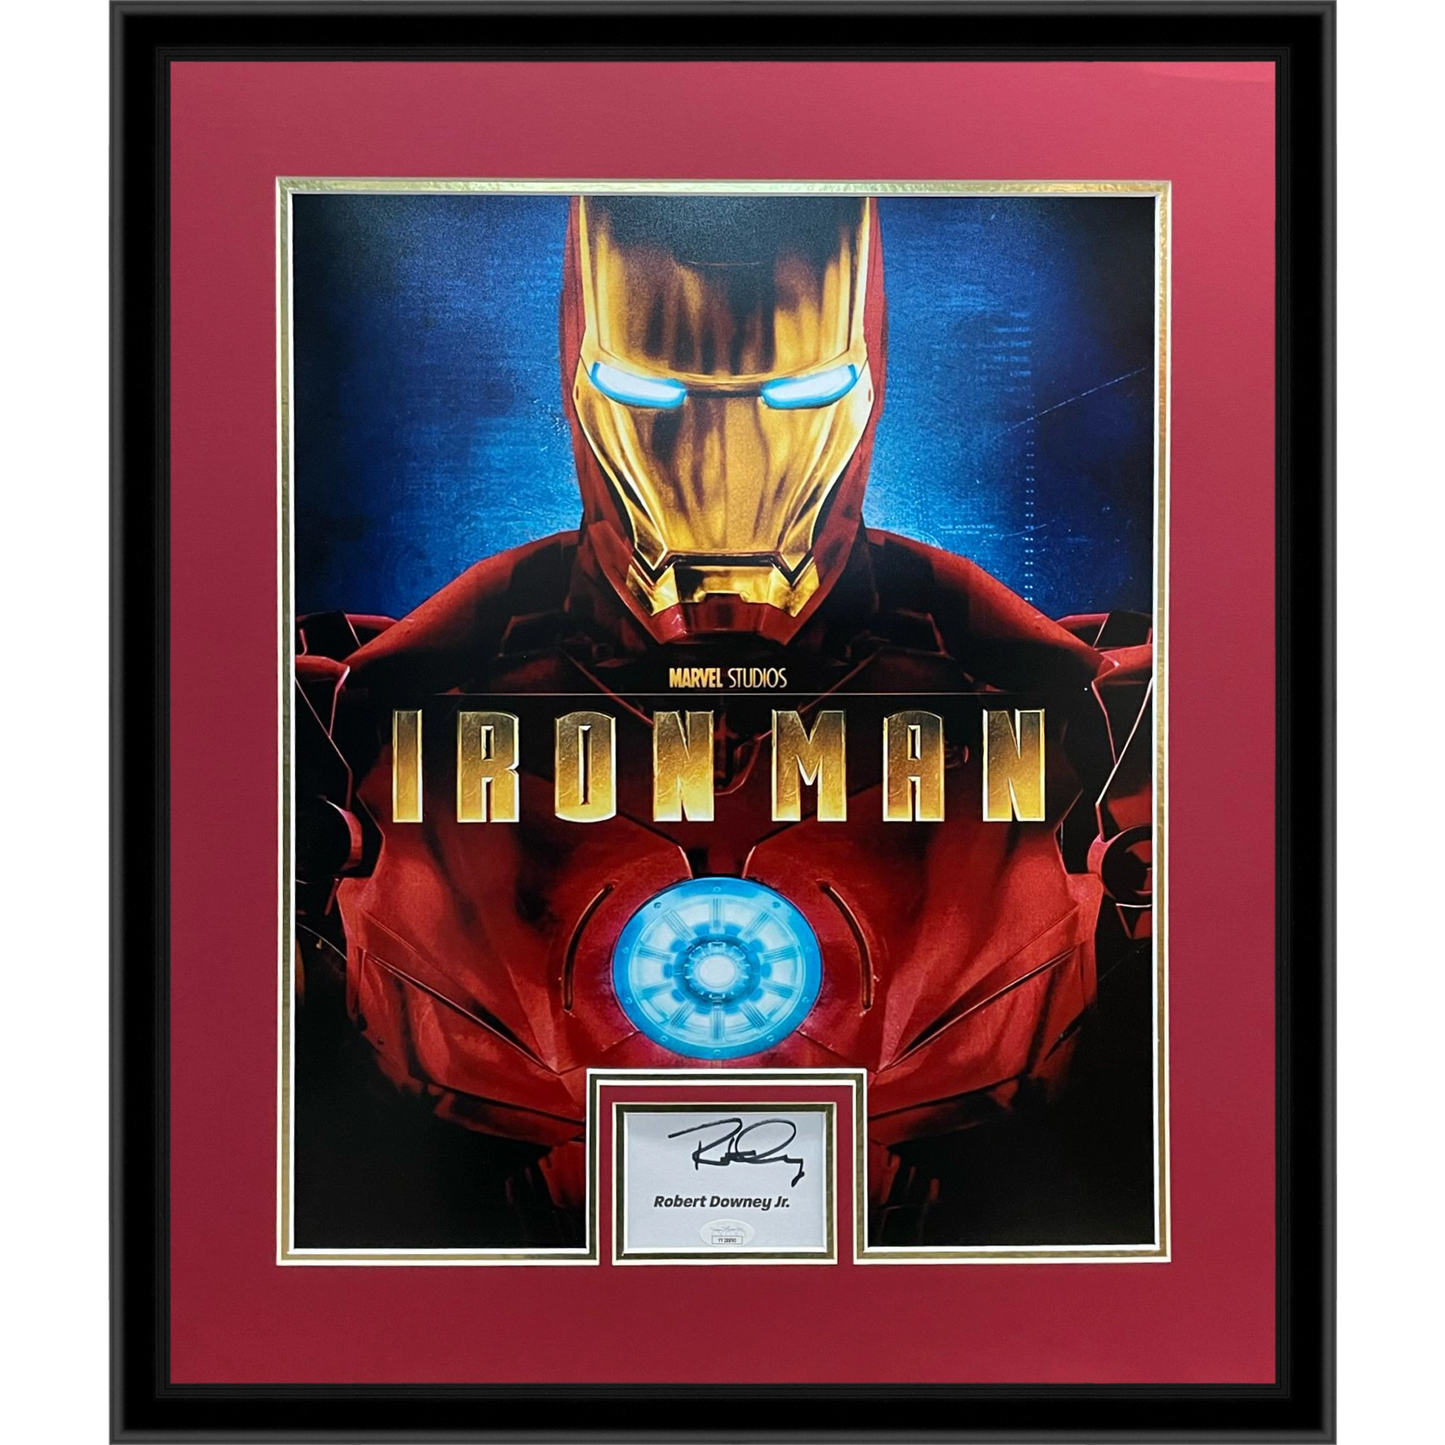 Robert Downey Jr Autographed Iron Man Deluxe Framed 16x20 Movie Poster Piece JSA